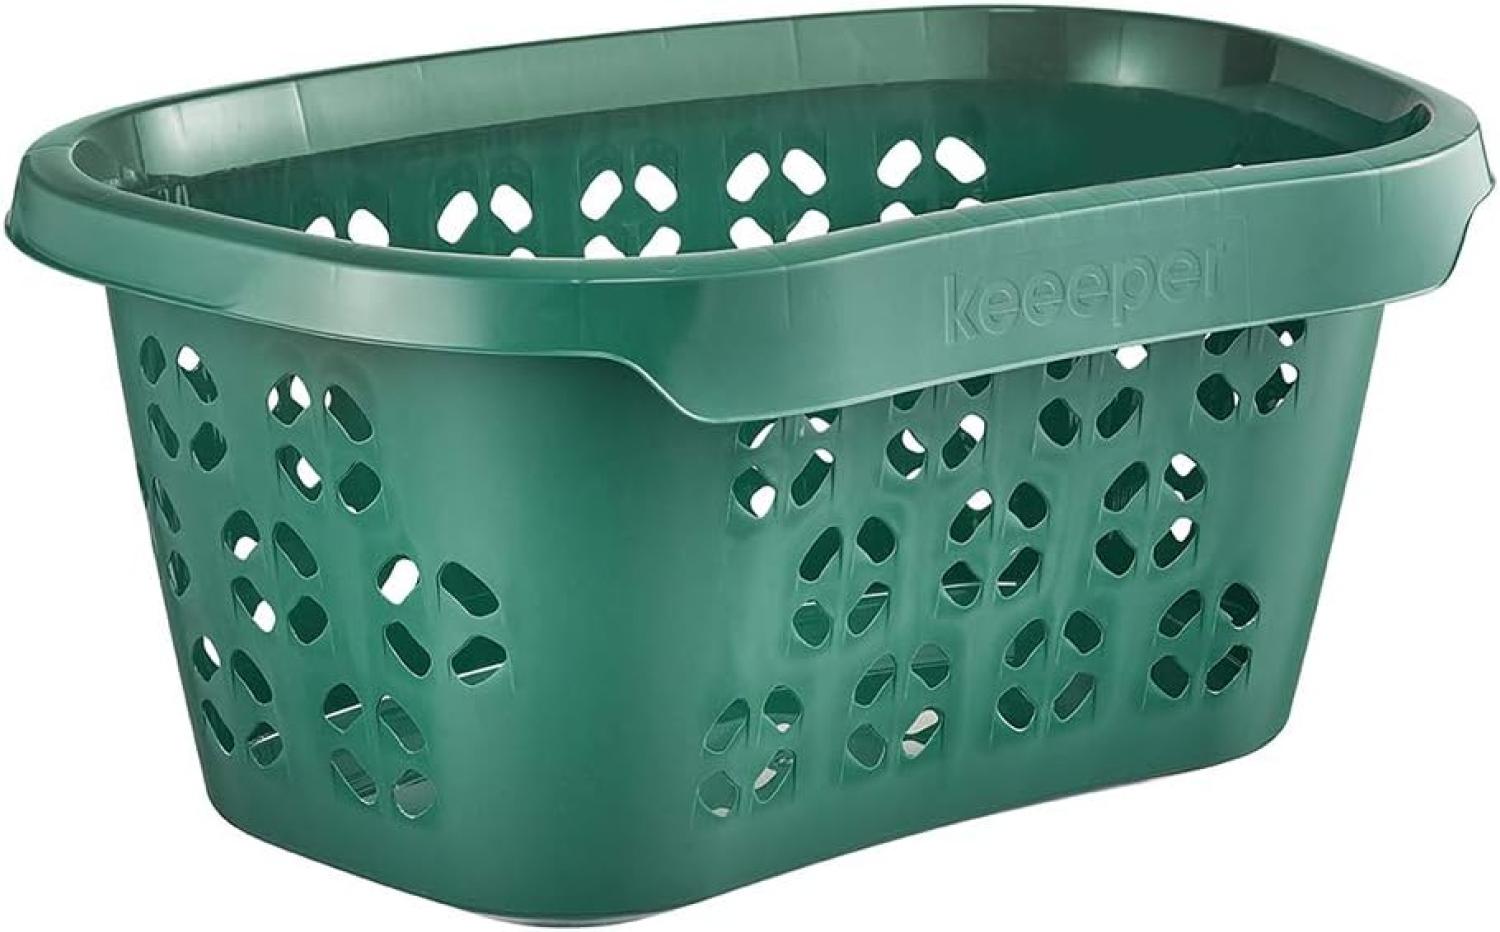 keeeper Wäschekorb ''anton eco'', Breite: 575 mm, grün Farbe: eco-green, aus 100% Recyclingkunststoff, - 1 Stück (1009330800000) Bild 1